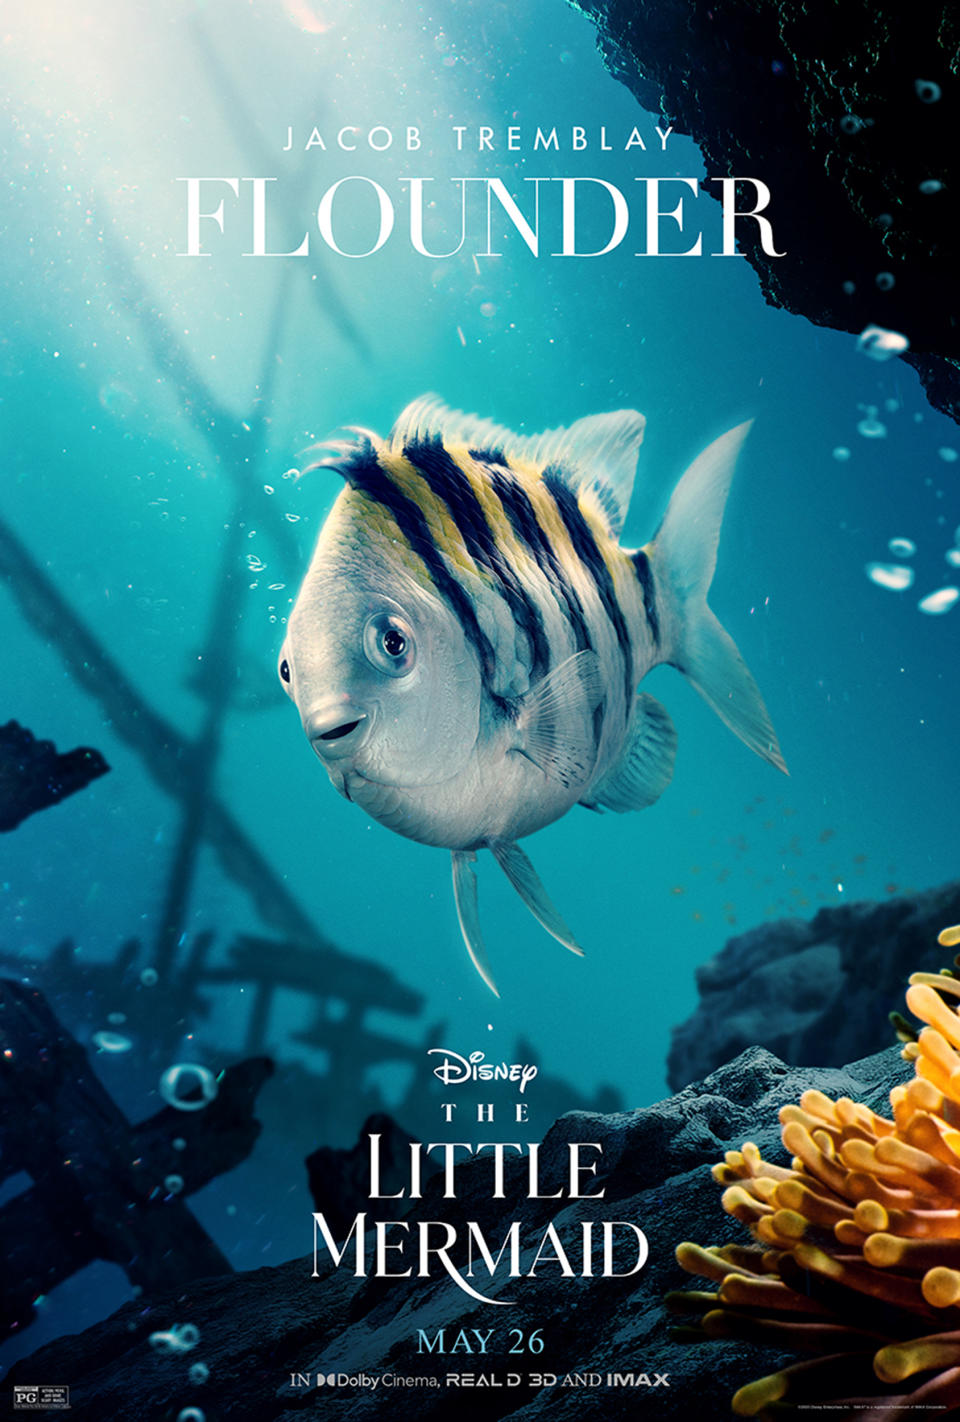 Jacob Tremblay as Flounder in The Little Mermaid. (Disney)